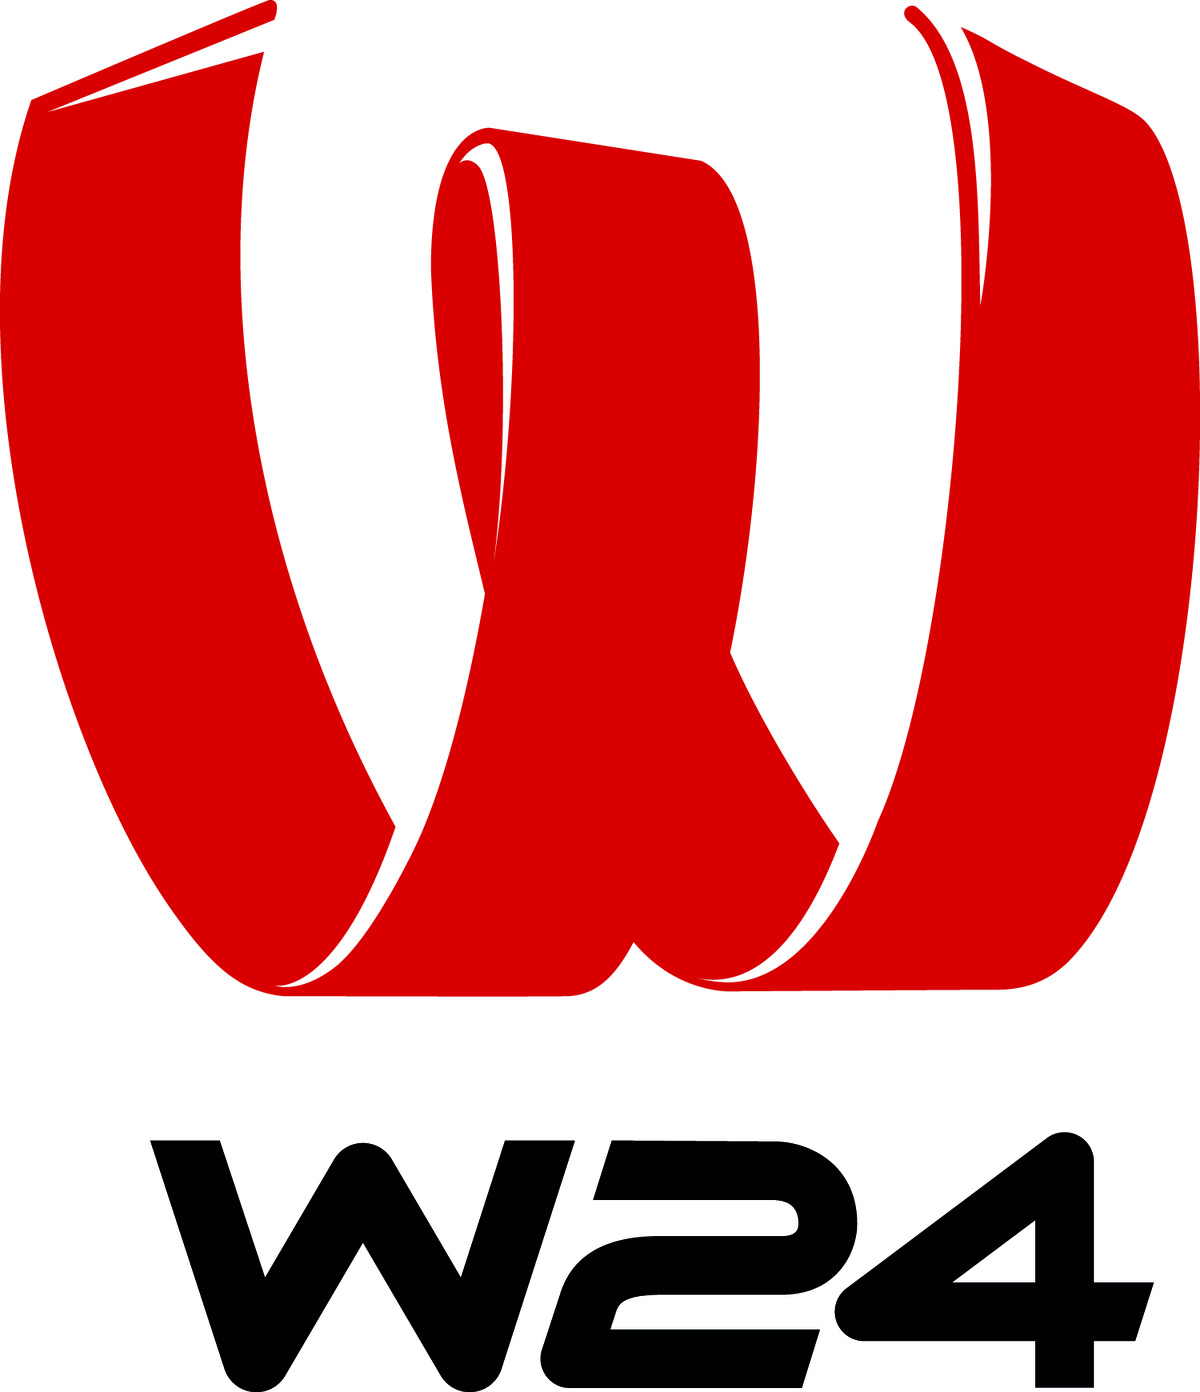 W24 TV Logo